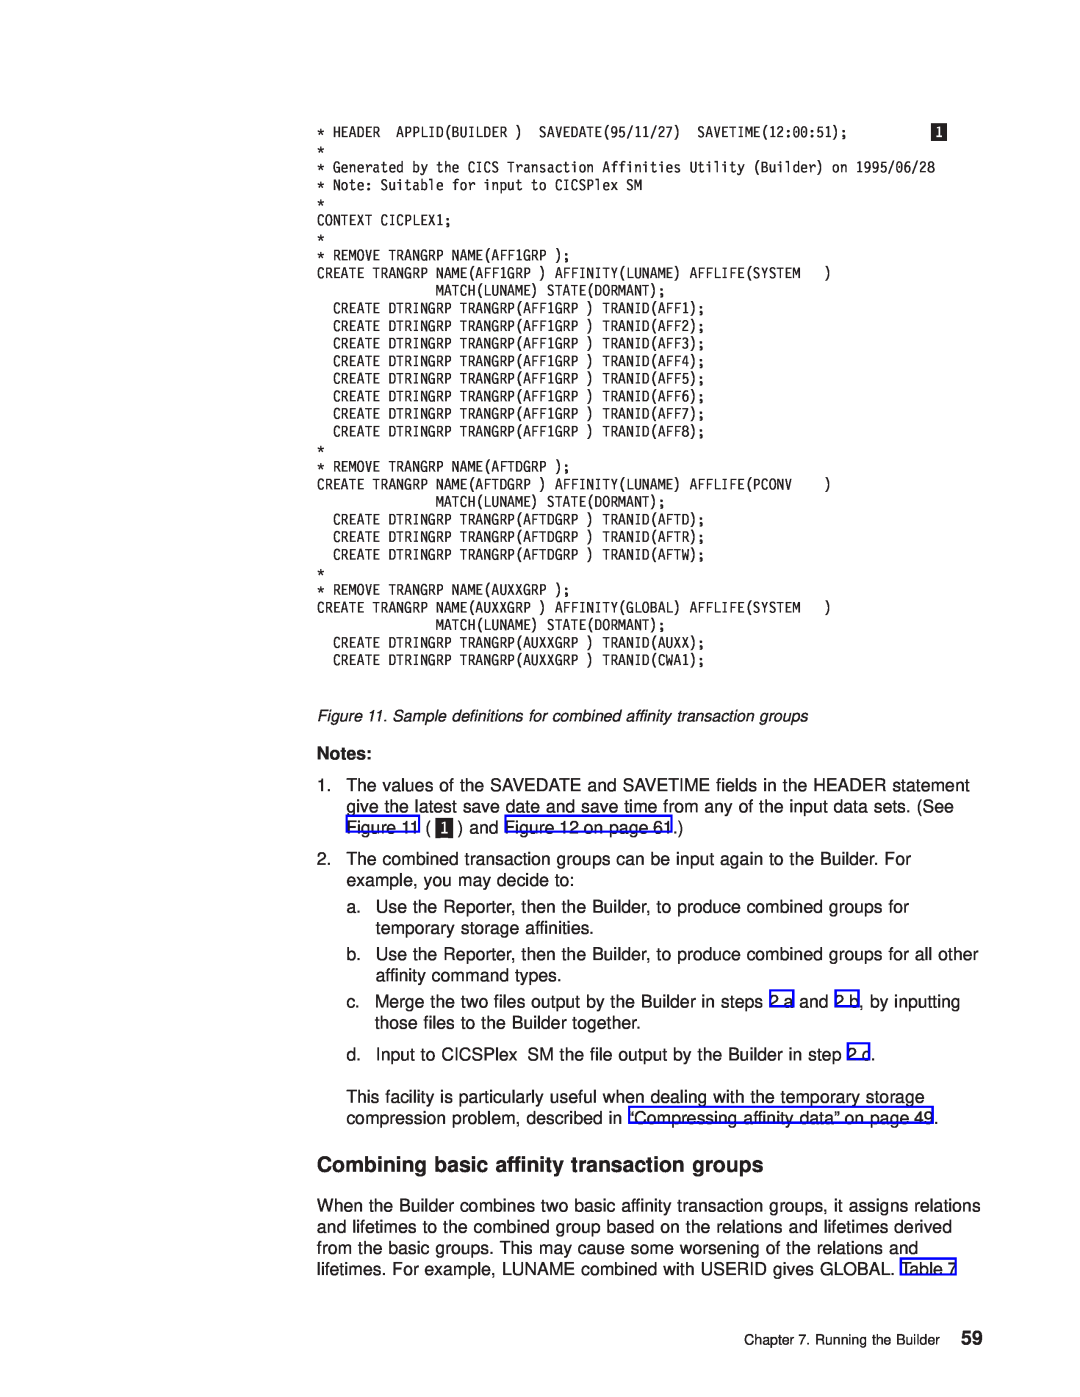 IBM OS manual Combining basic affinity transaction groups 